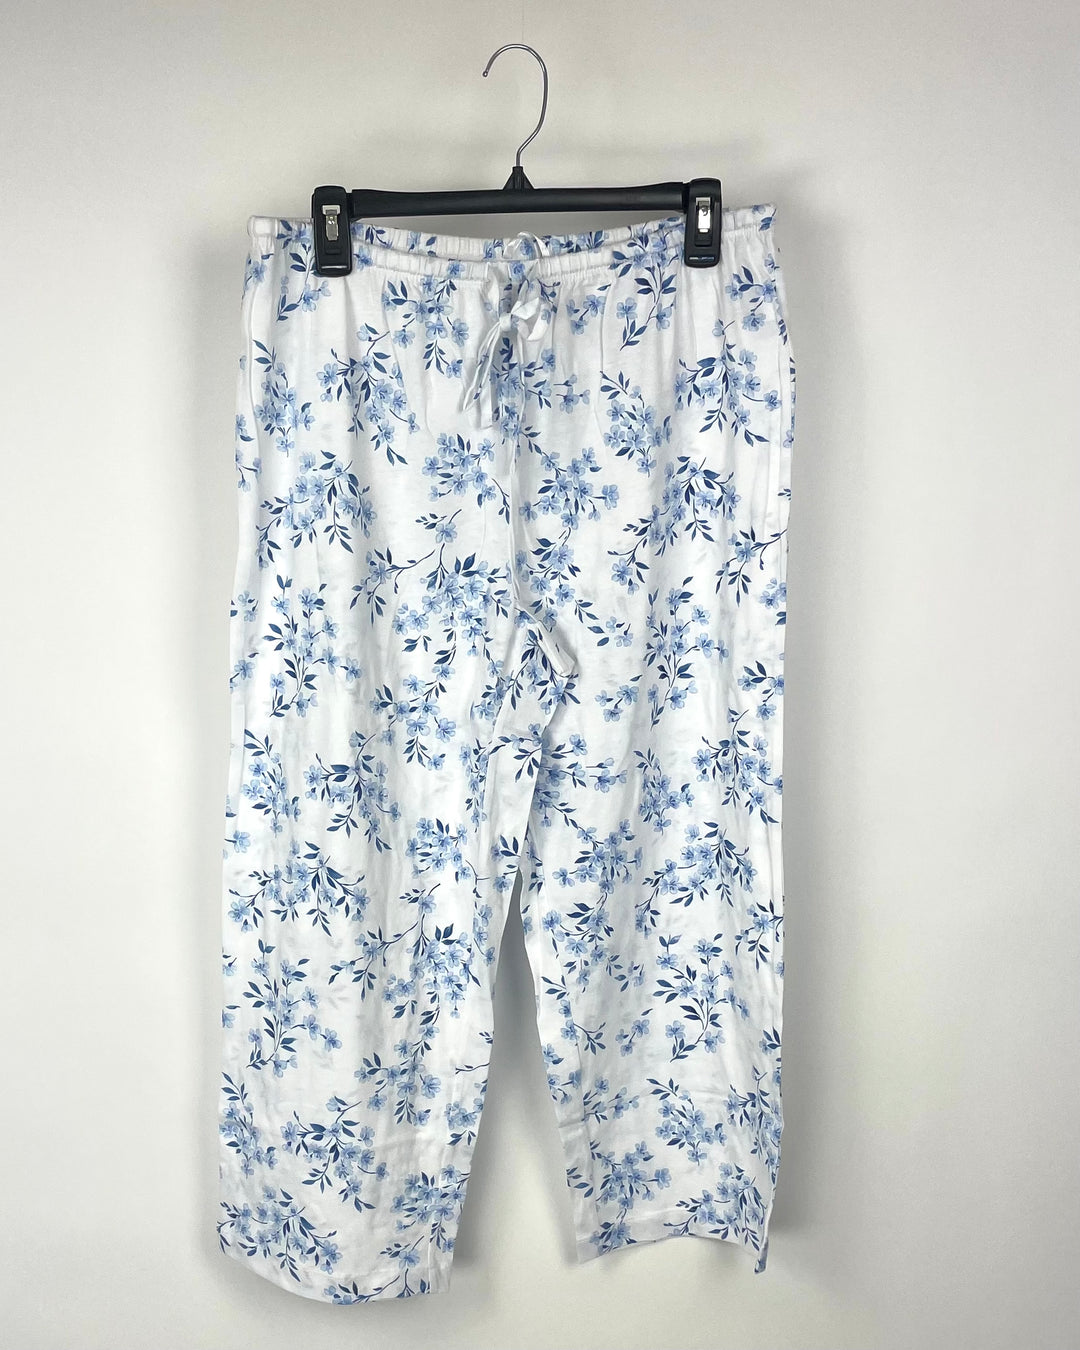 Blue And White Floral Print Pajama Set - Medium